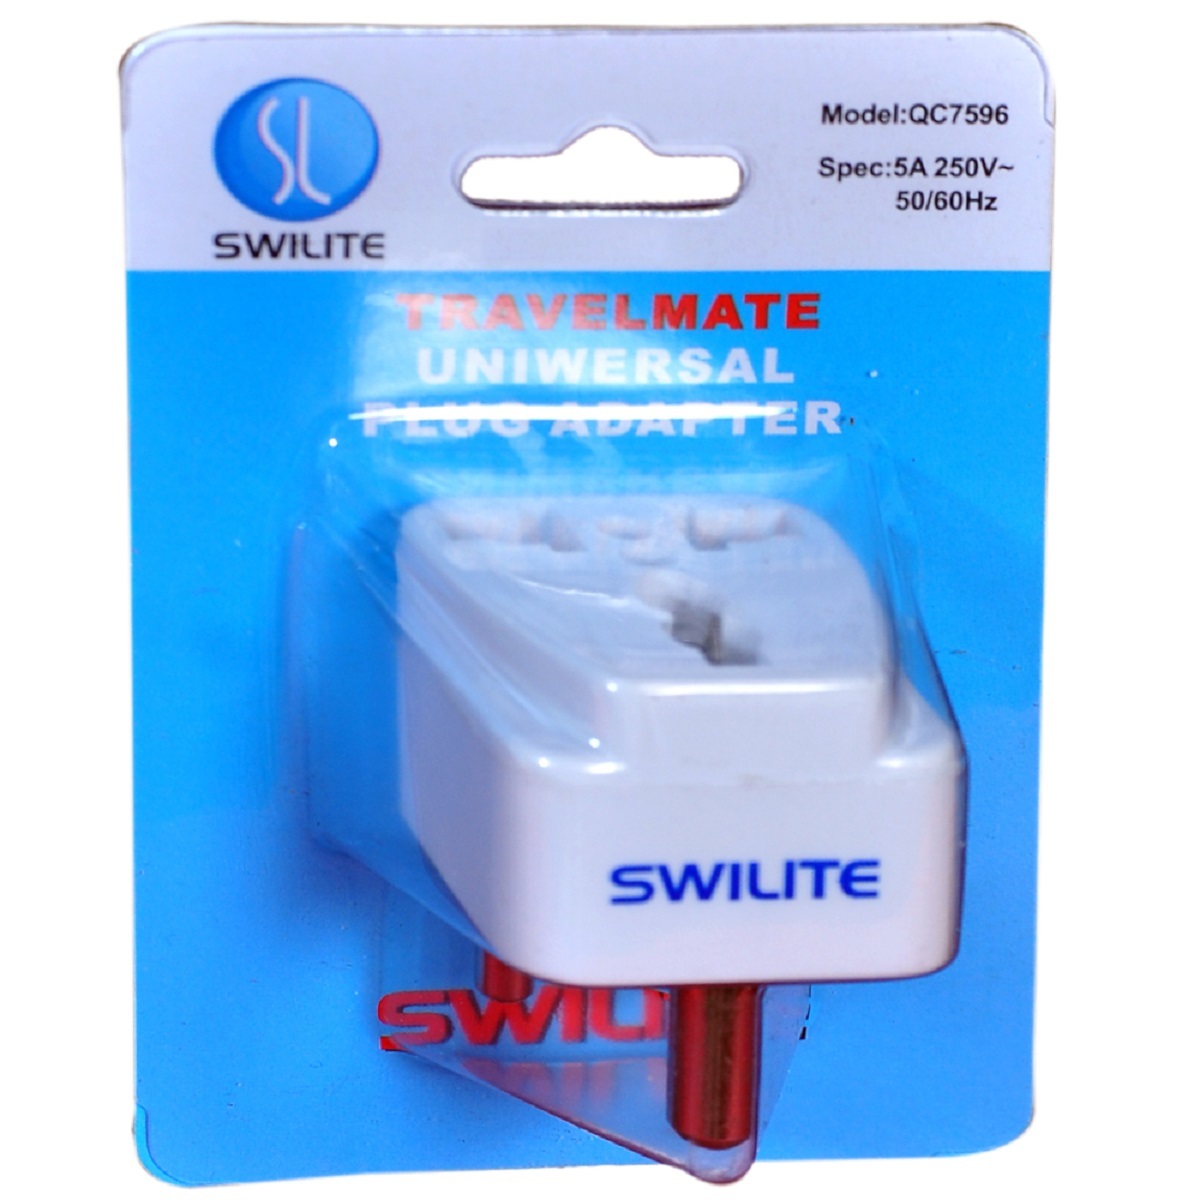 Swilite Multi Plug Adaptor 5A QC7596